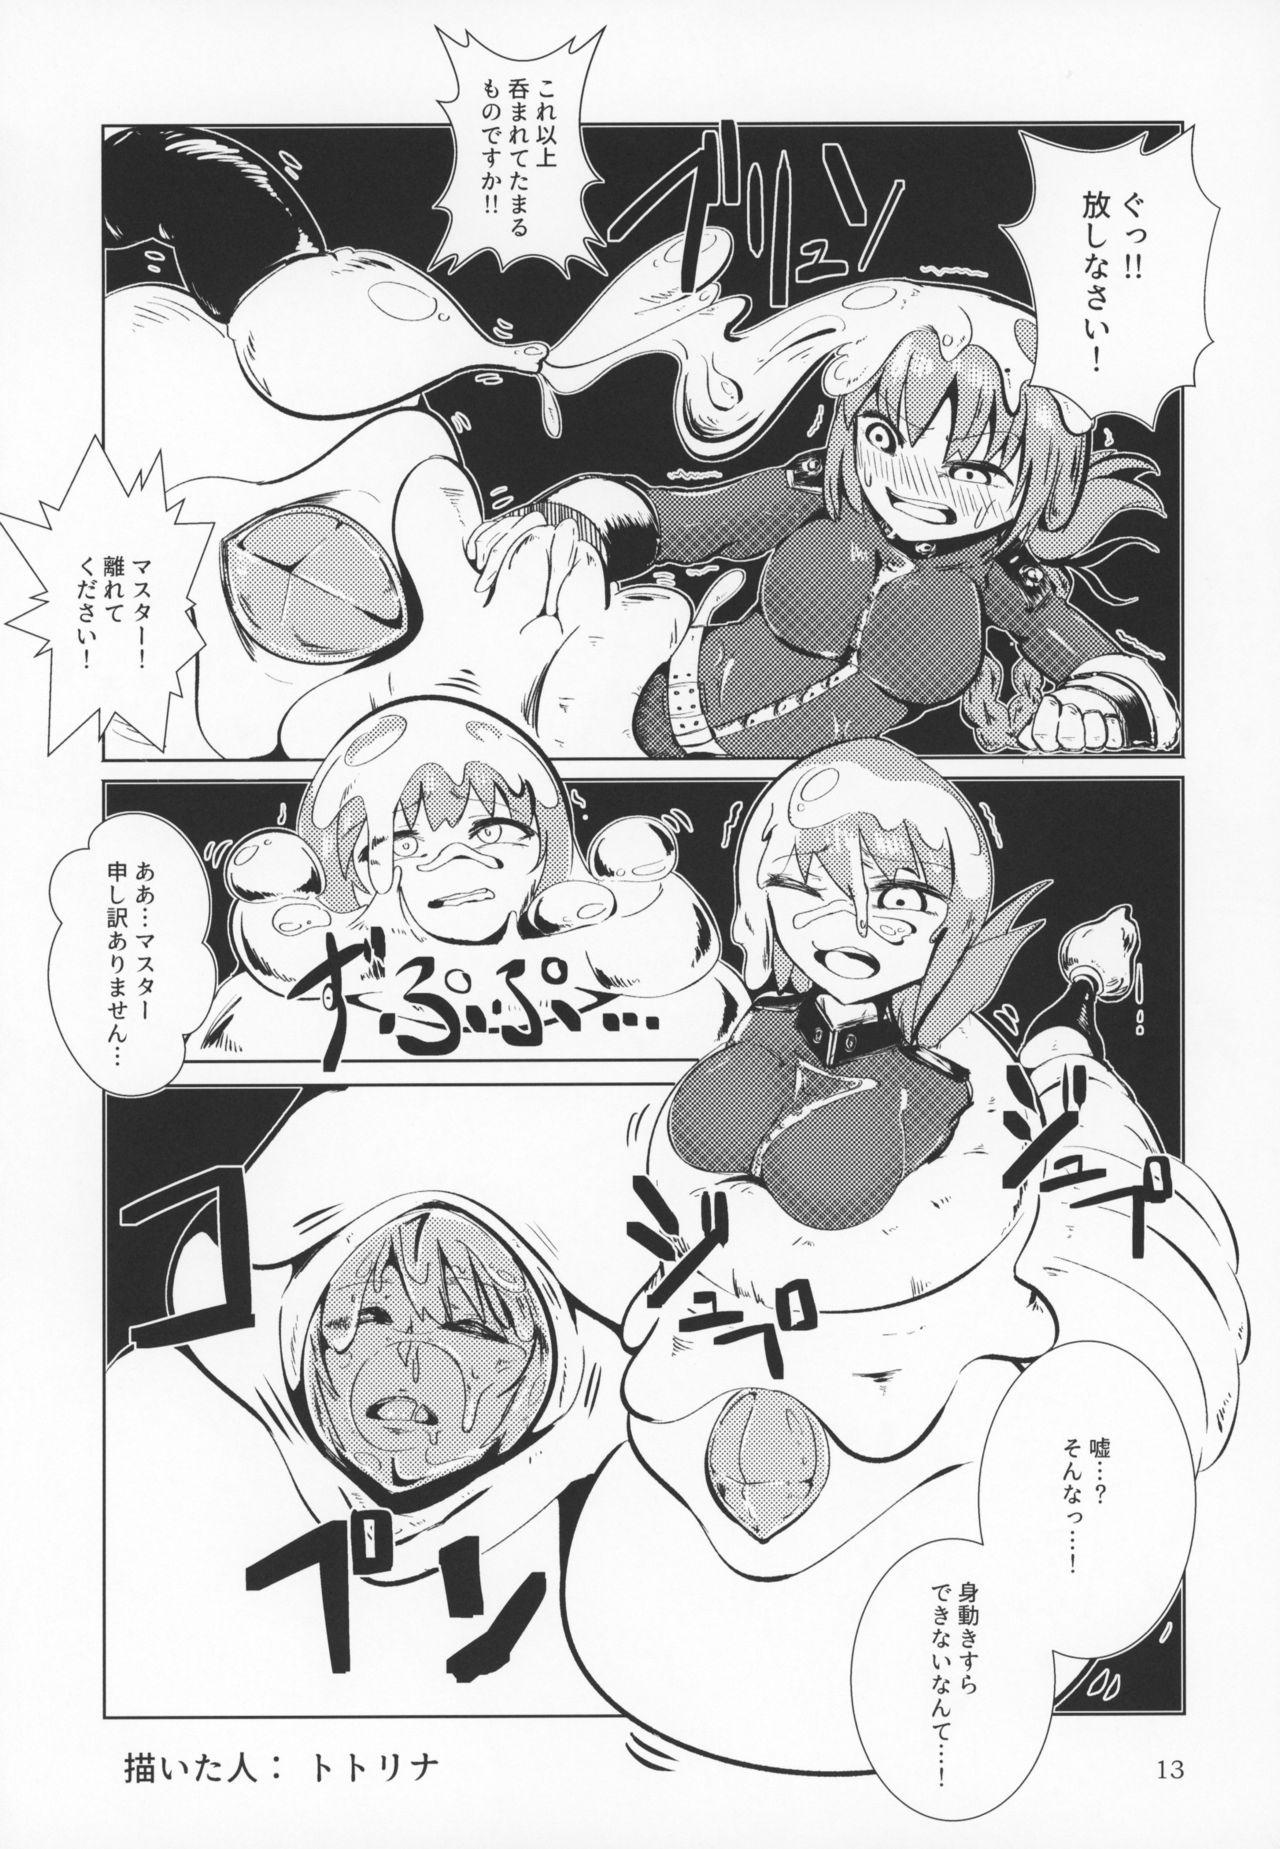 Cameltoe Fate VoreryOrder A.D.2018 Marunomi Tokuiten - Fate grand order Black Cock - Page 12